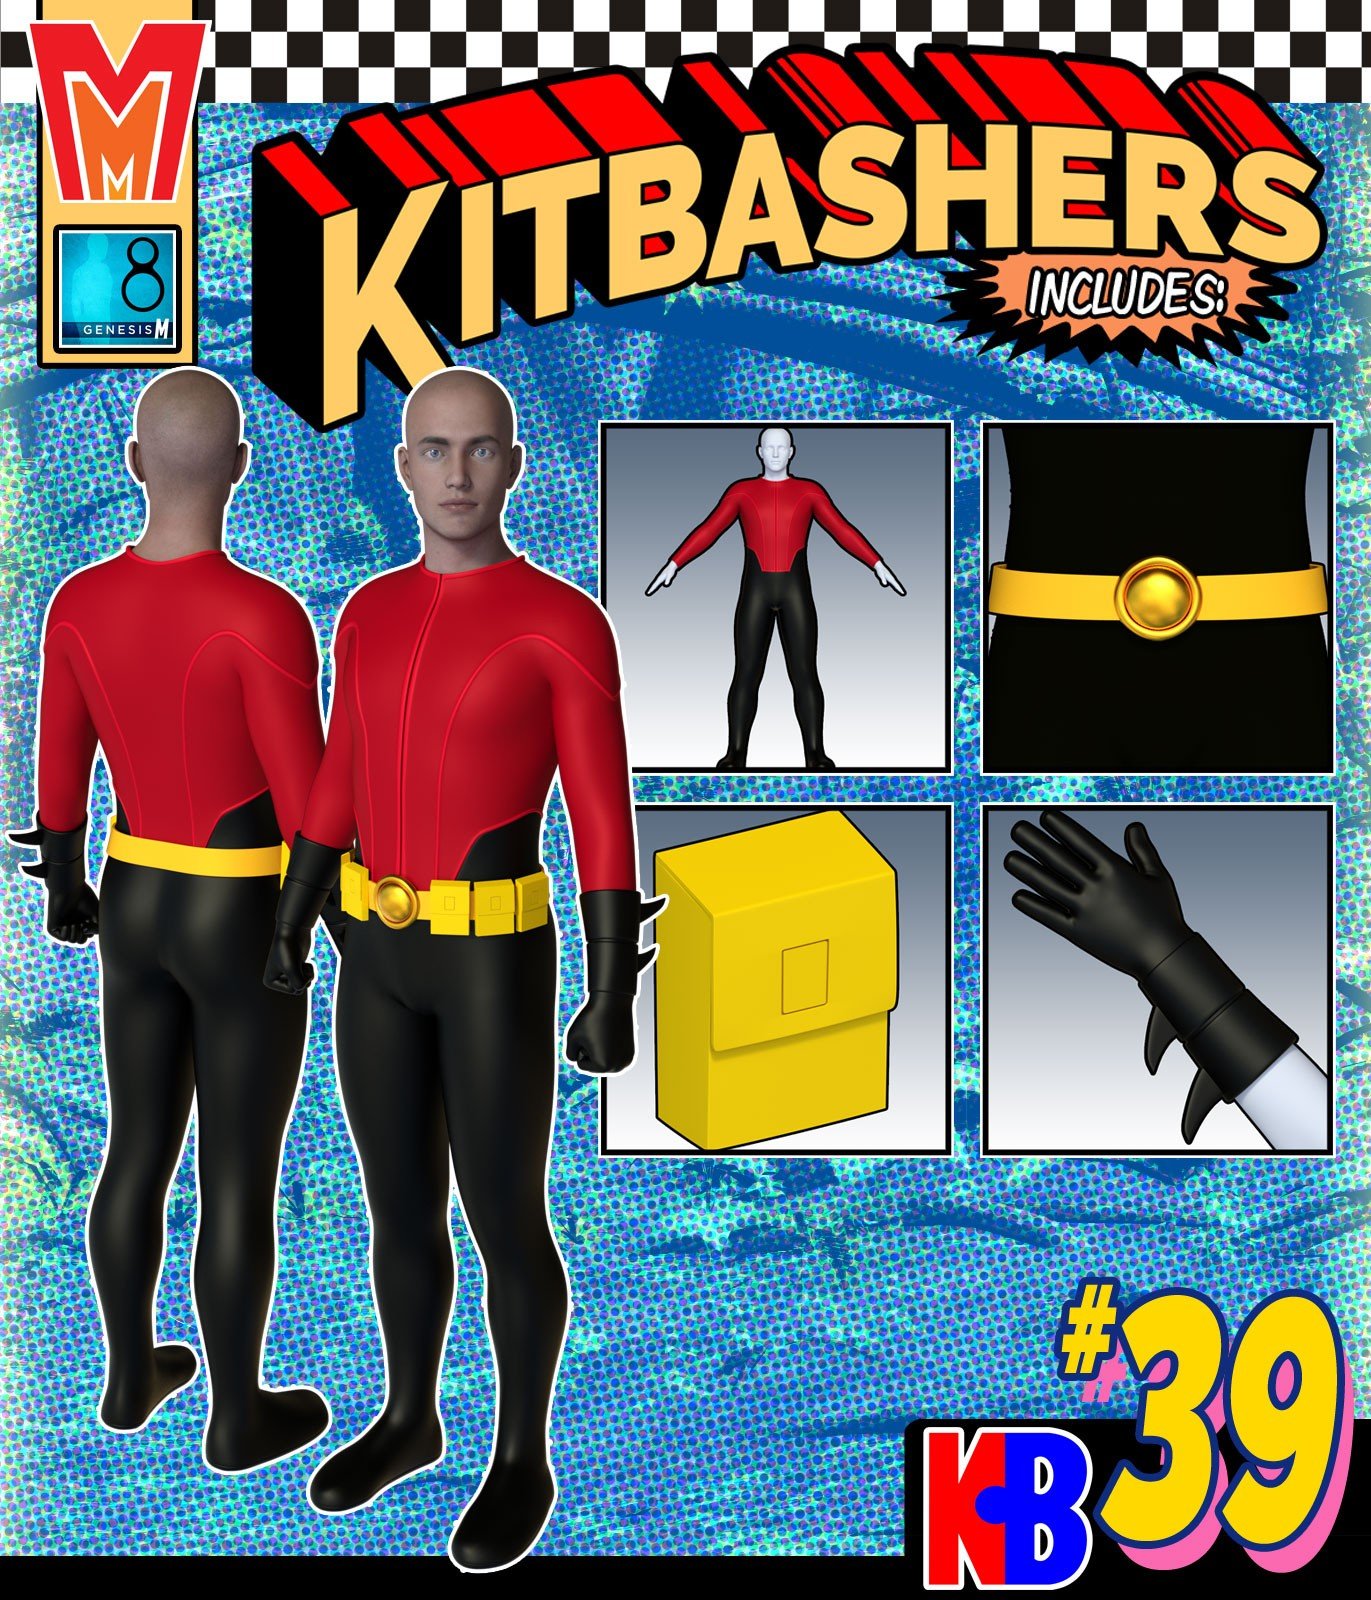 Kitbashers 039 MMG8M by: MightyMite, 3D Models by Daz 3D